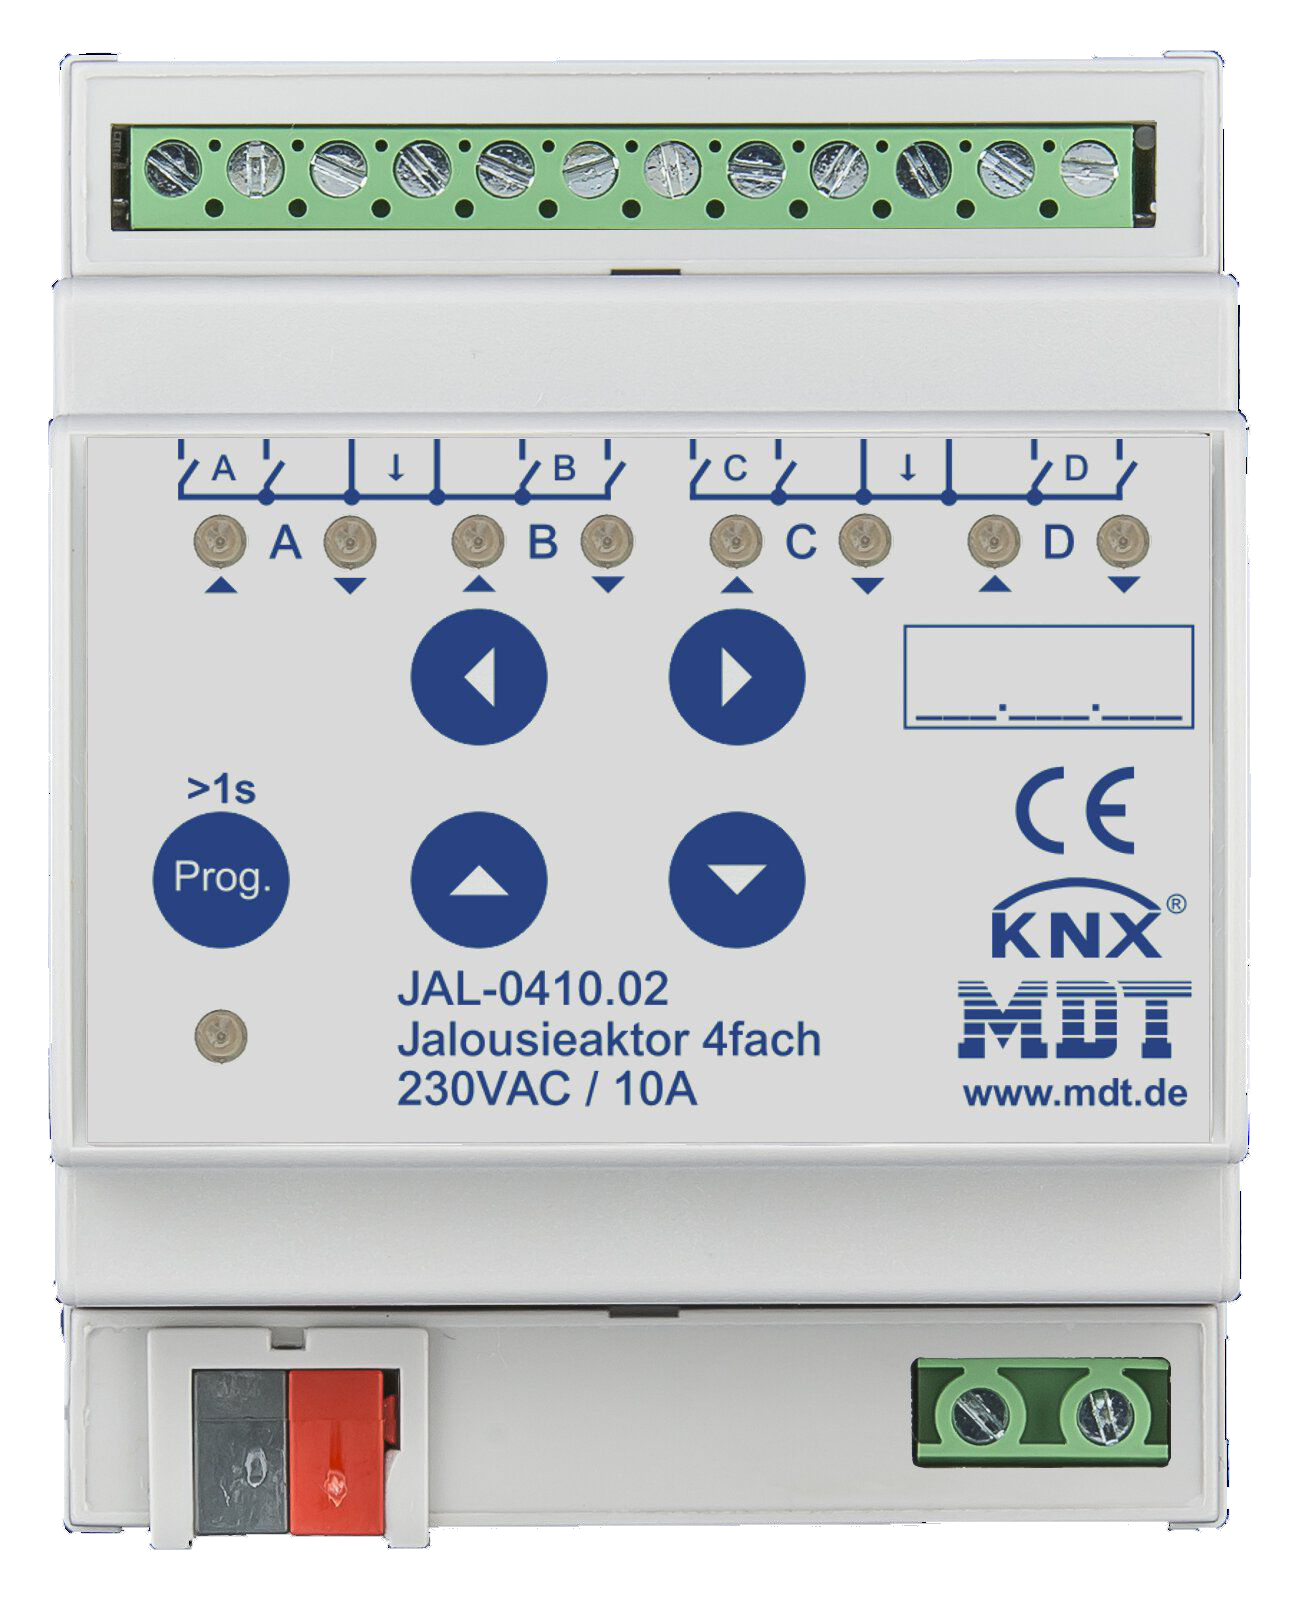 MDT JAL-0410.02 Jalousieaktor 4-fach, 4TE REG, 10A, 230VAC